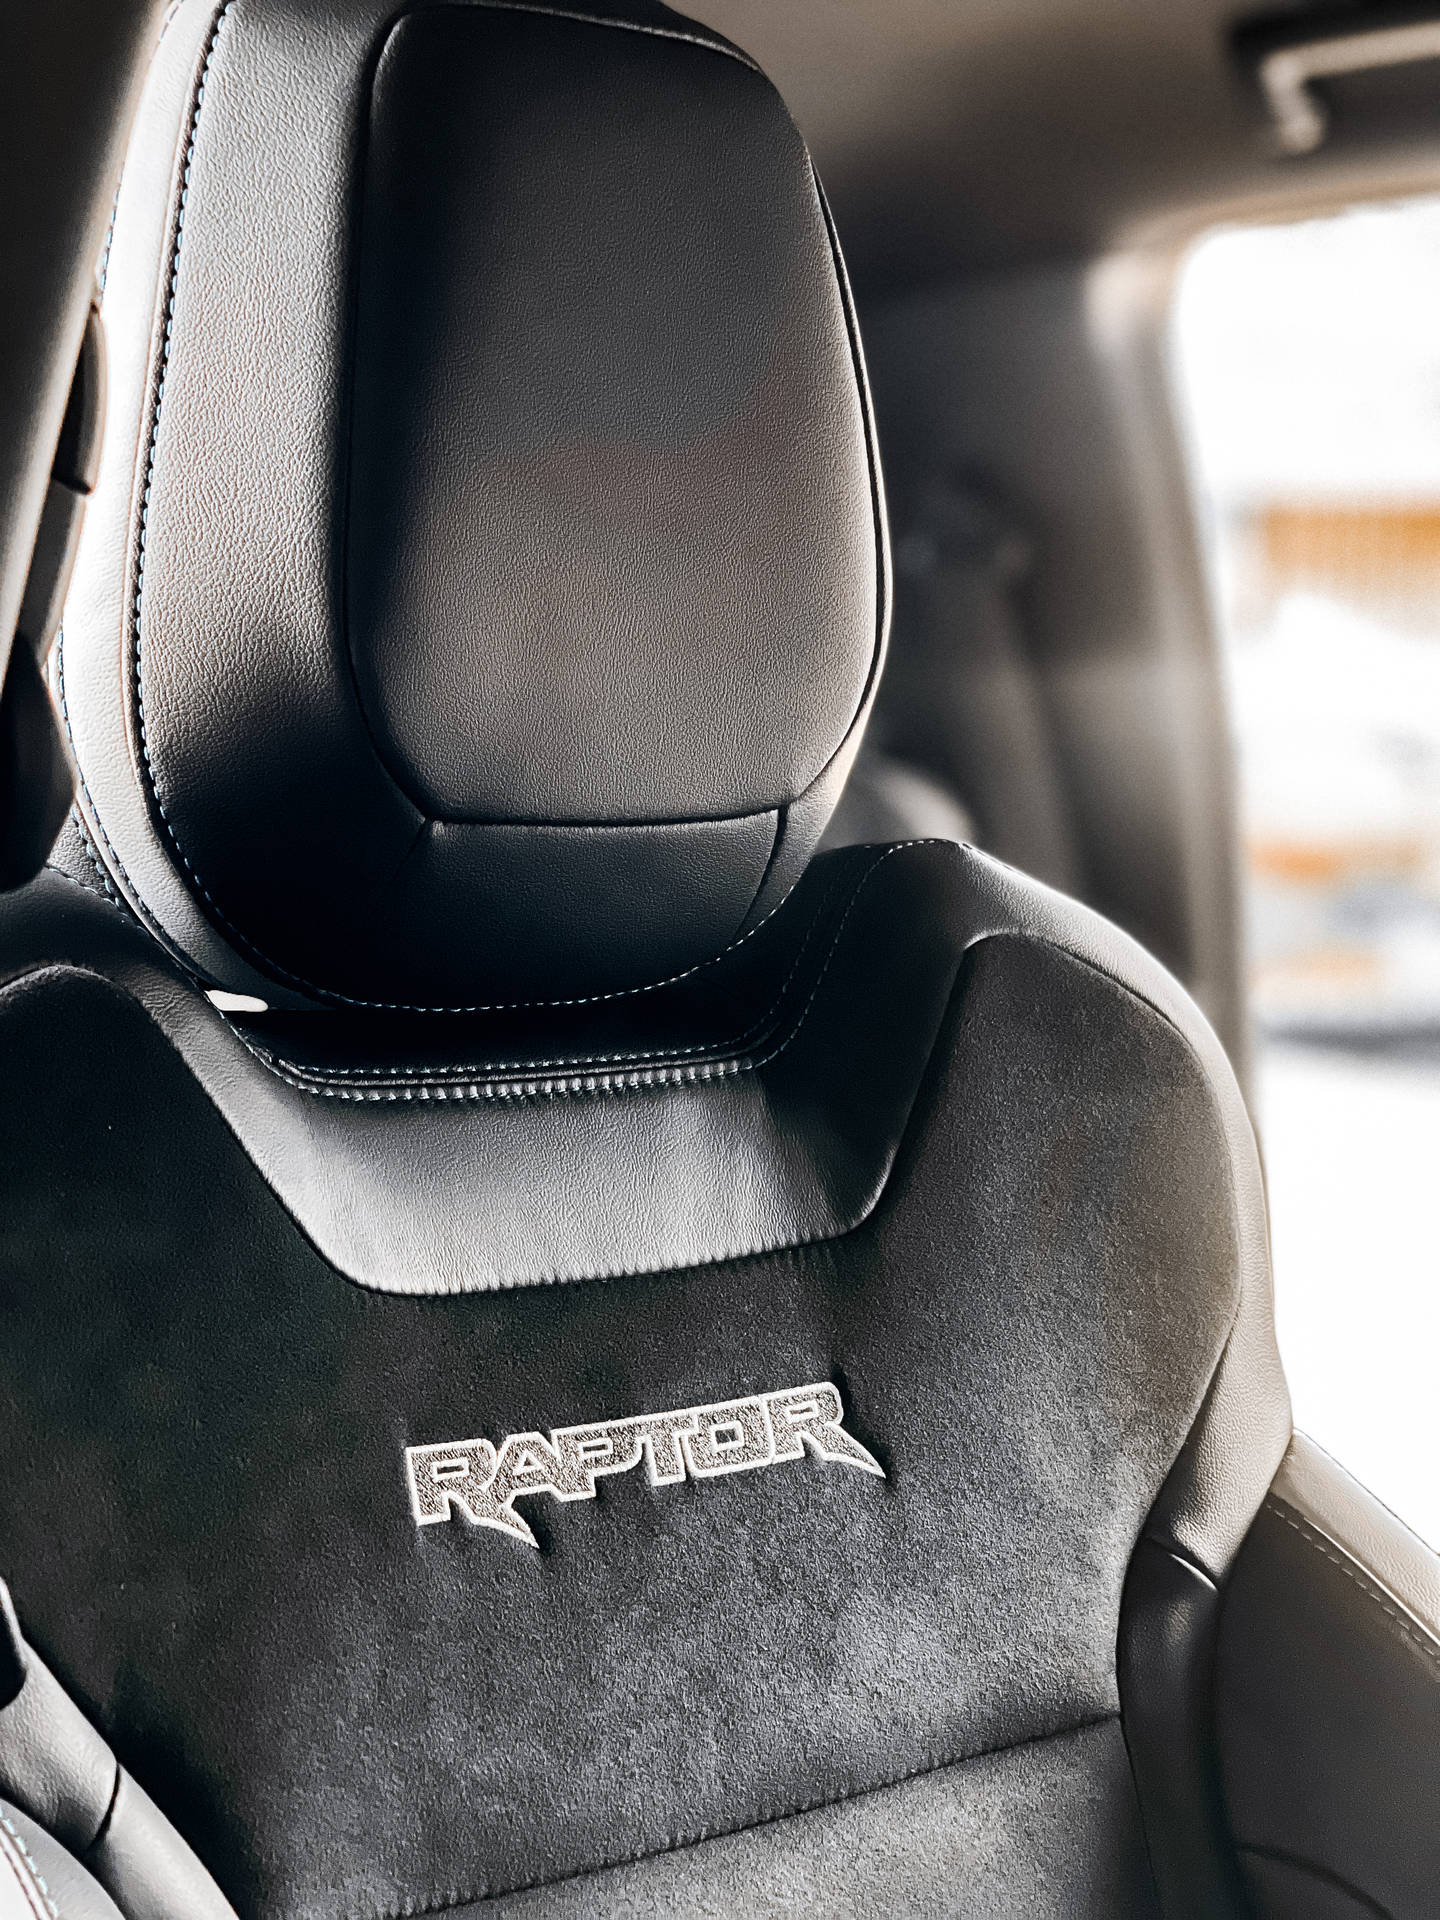 Ford Raptor Black Leather Seat Background